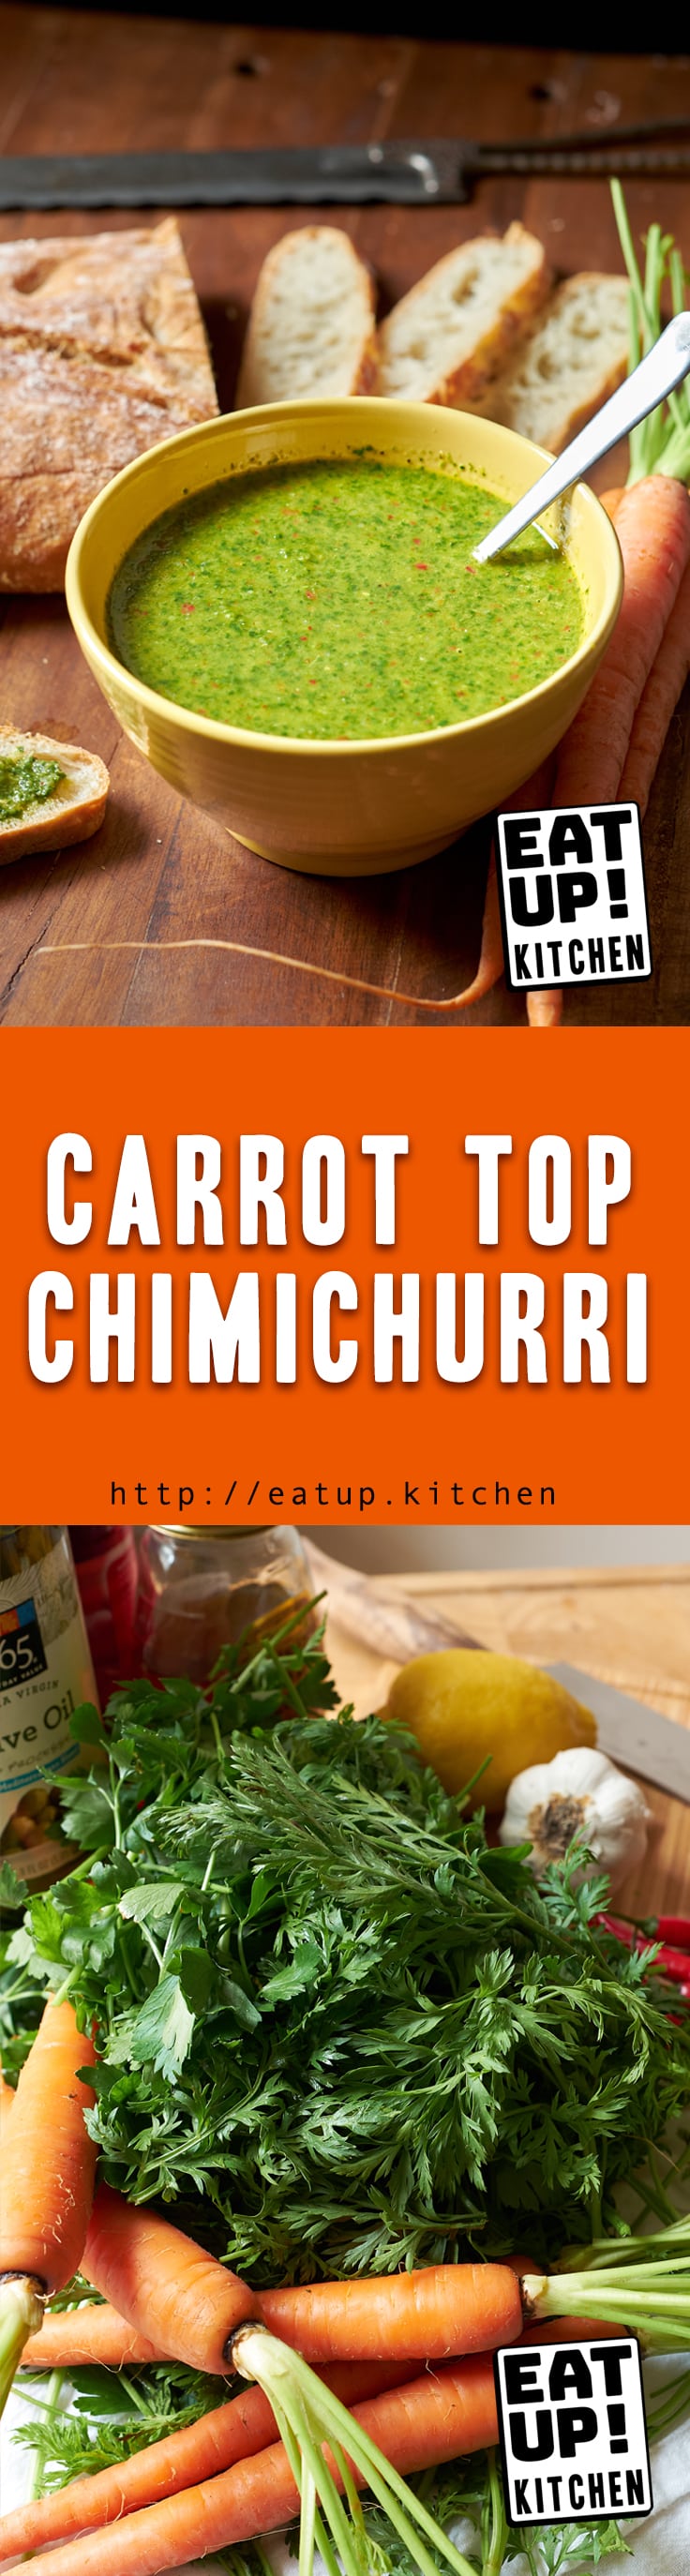 Carrot Top Chimichurri